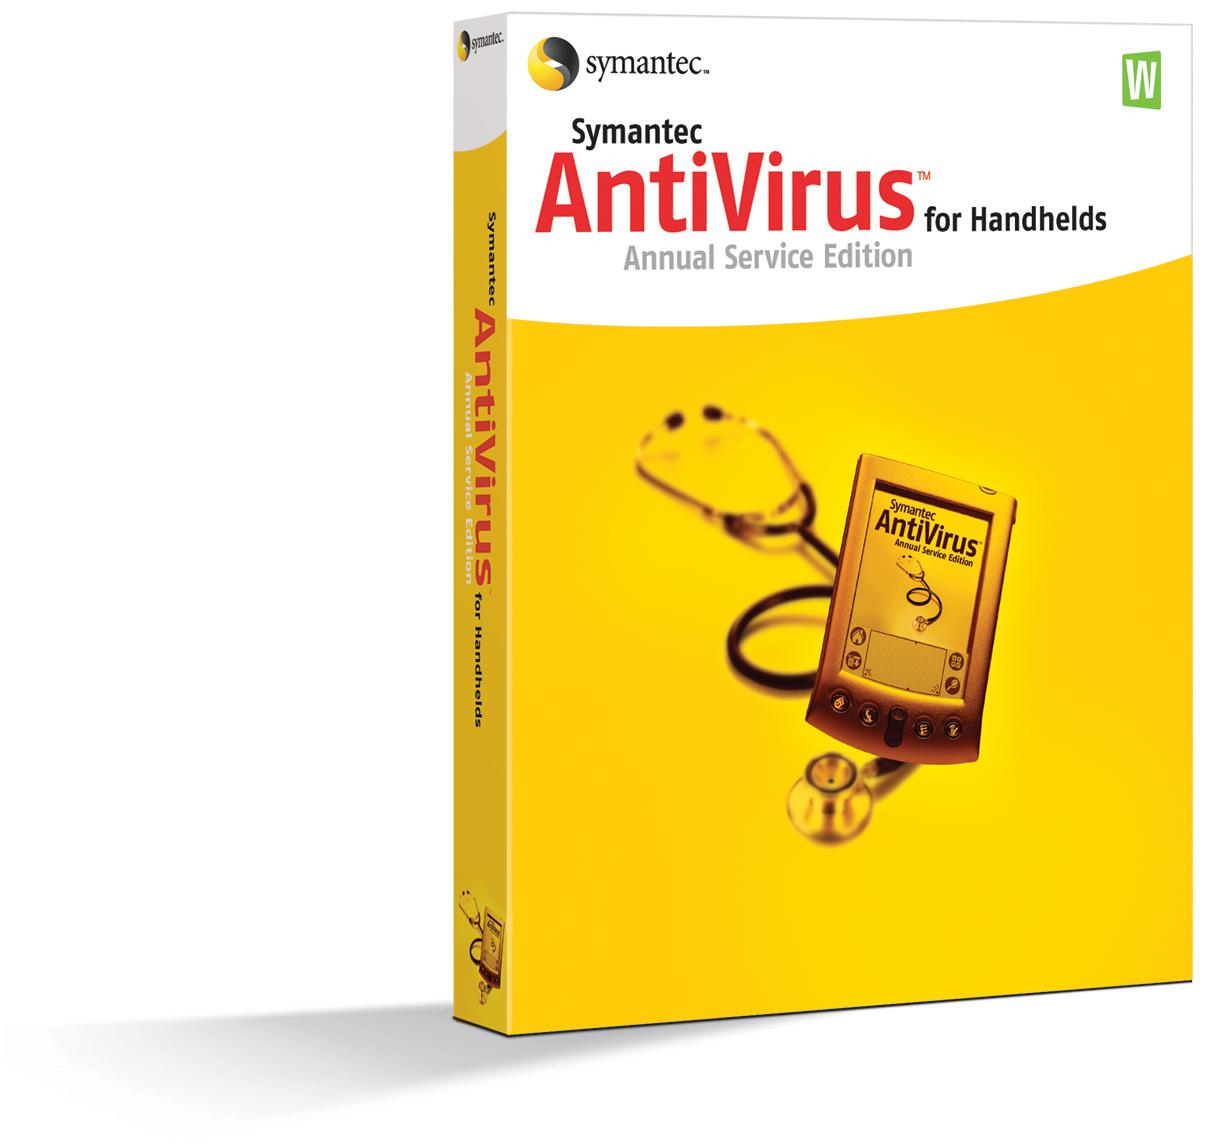 Symantec antivirus 10.0 corporate edition client free download